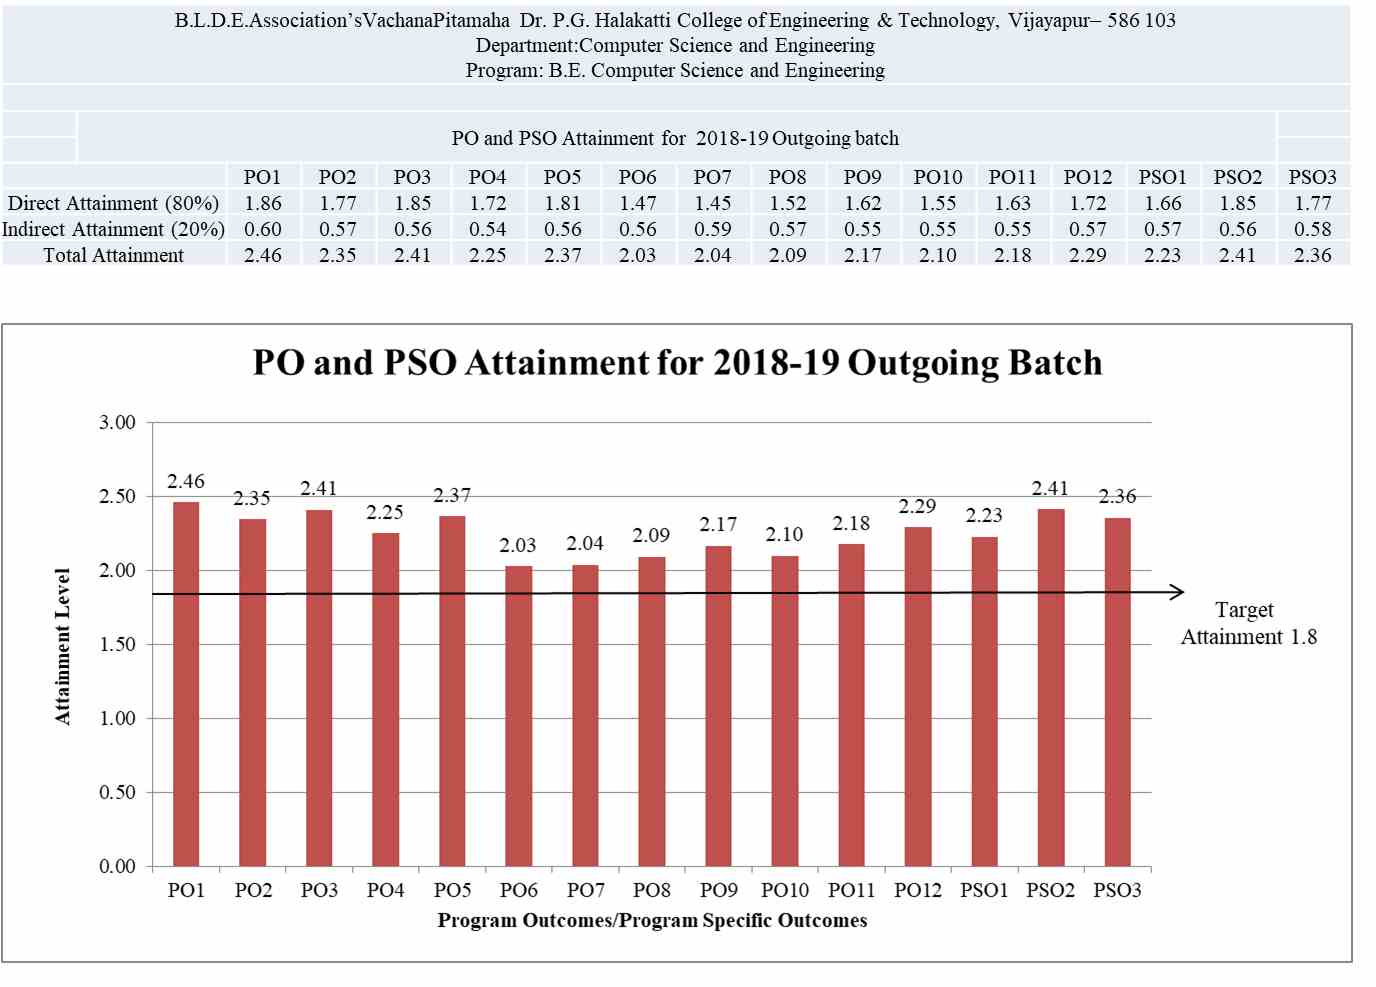 po-pso-attainment-for-2018-19-outgoing-batch